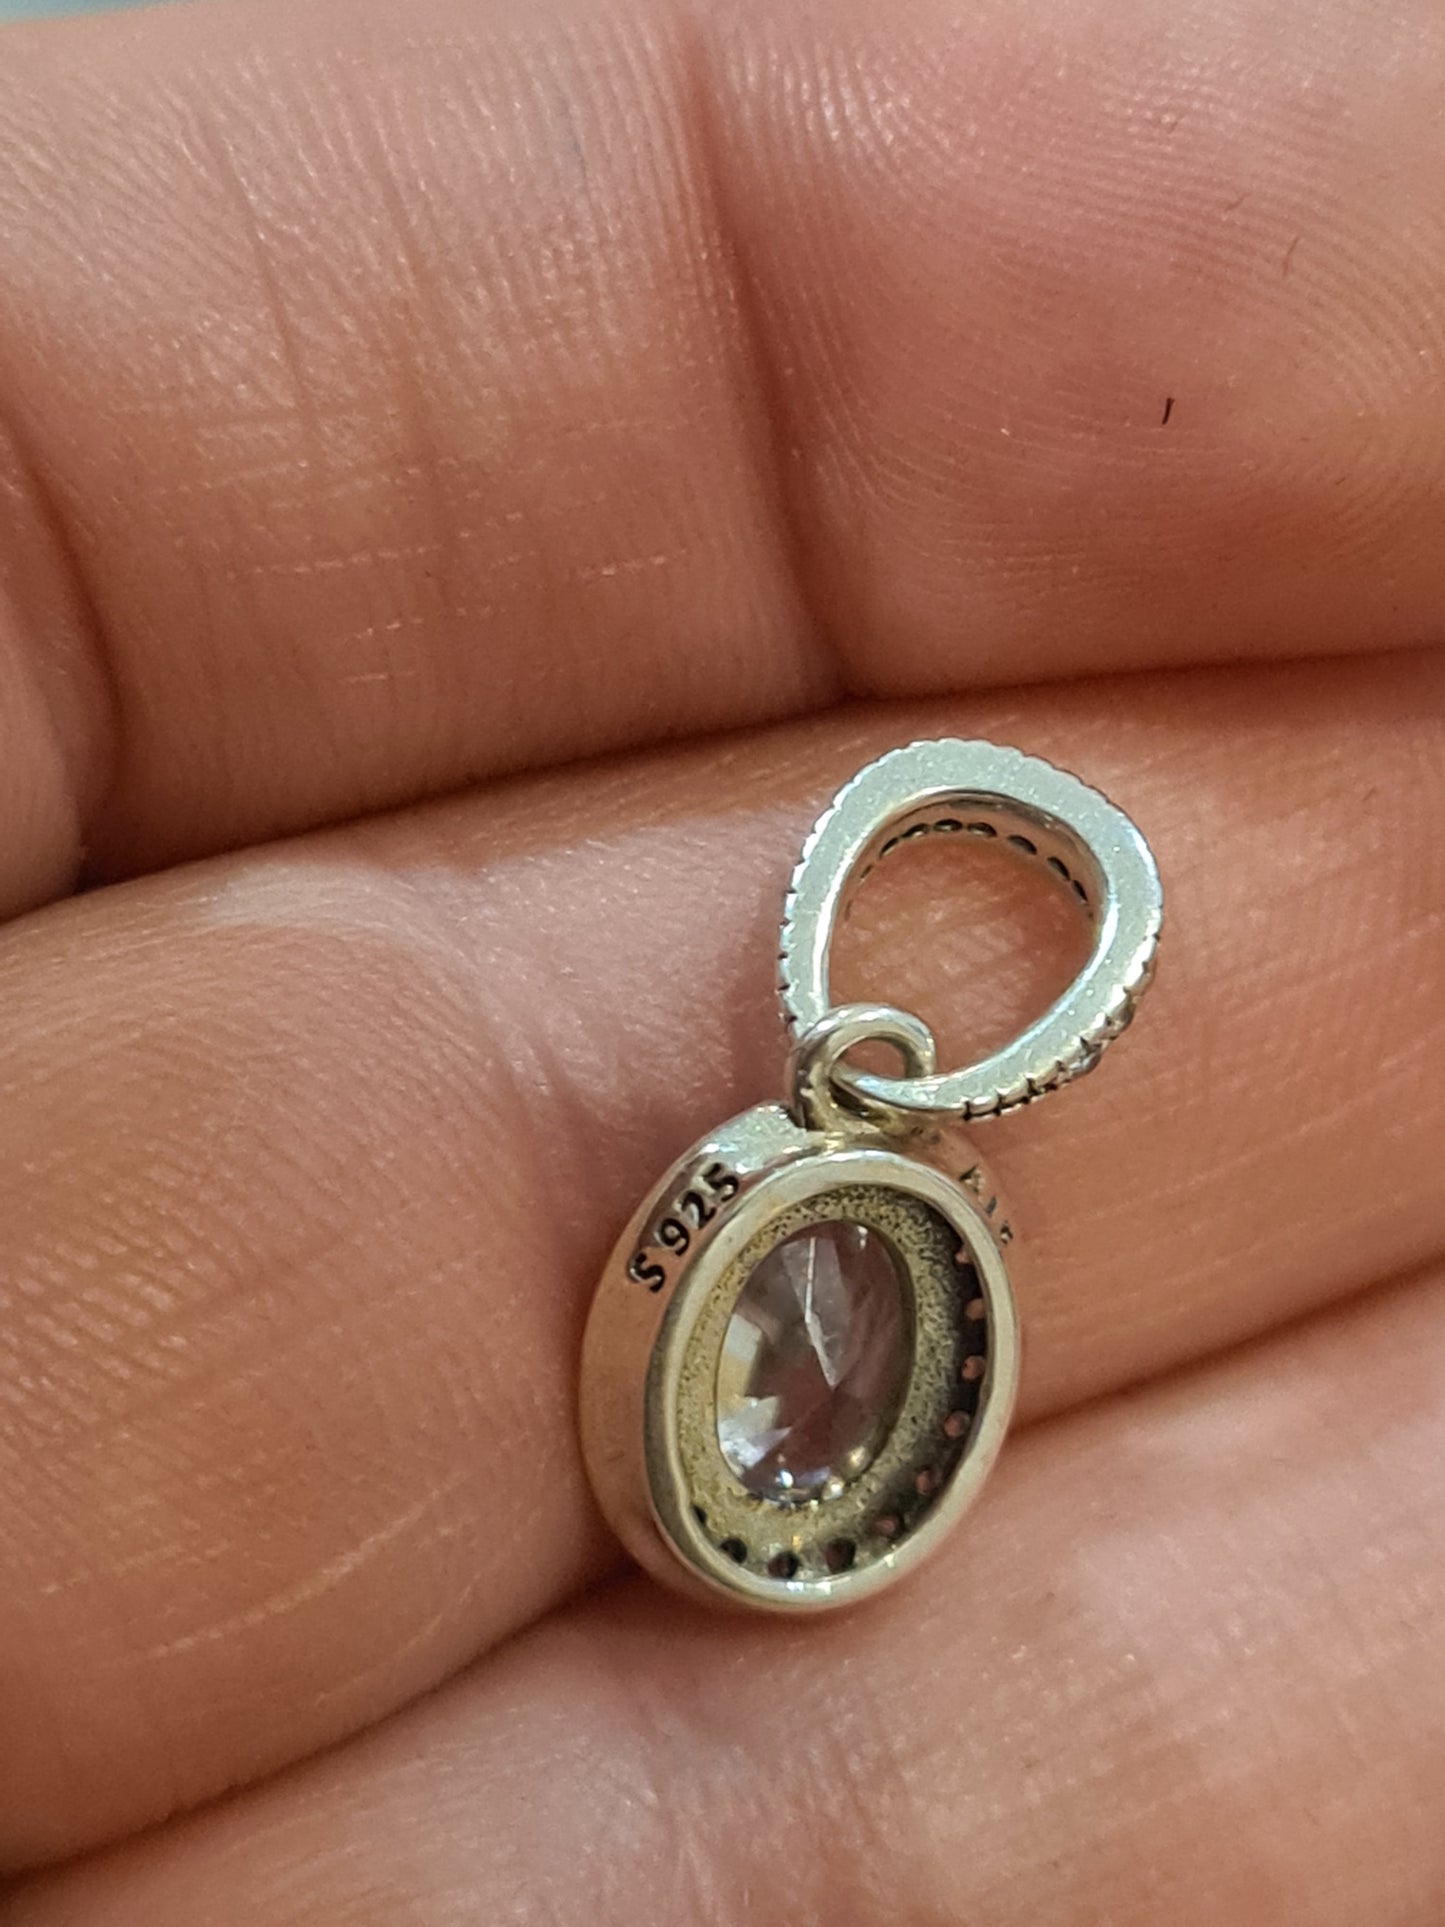 Genuine Pandora Large Stone Pendant Necklace with 45cm Chain